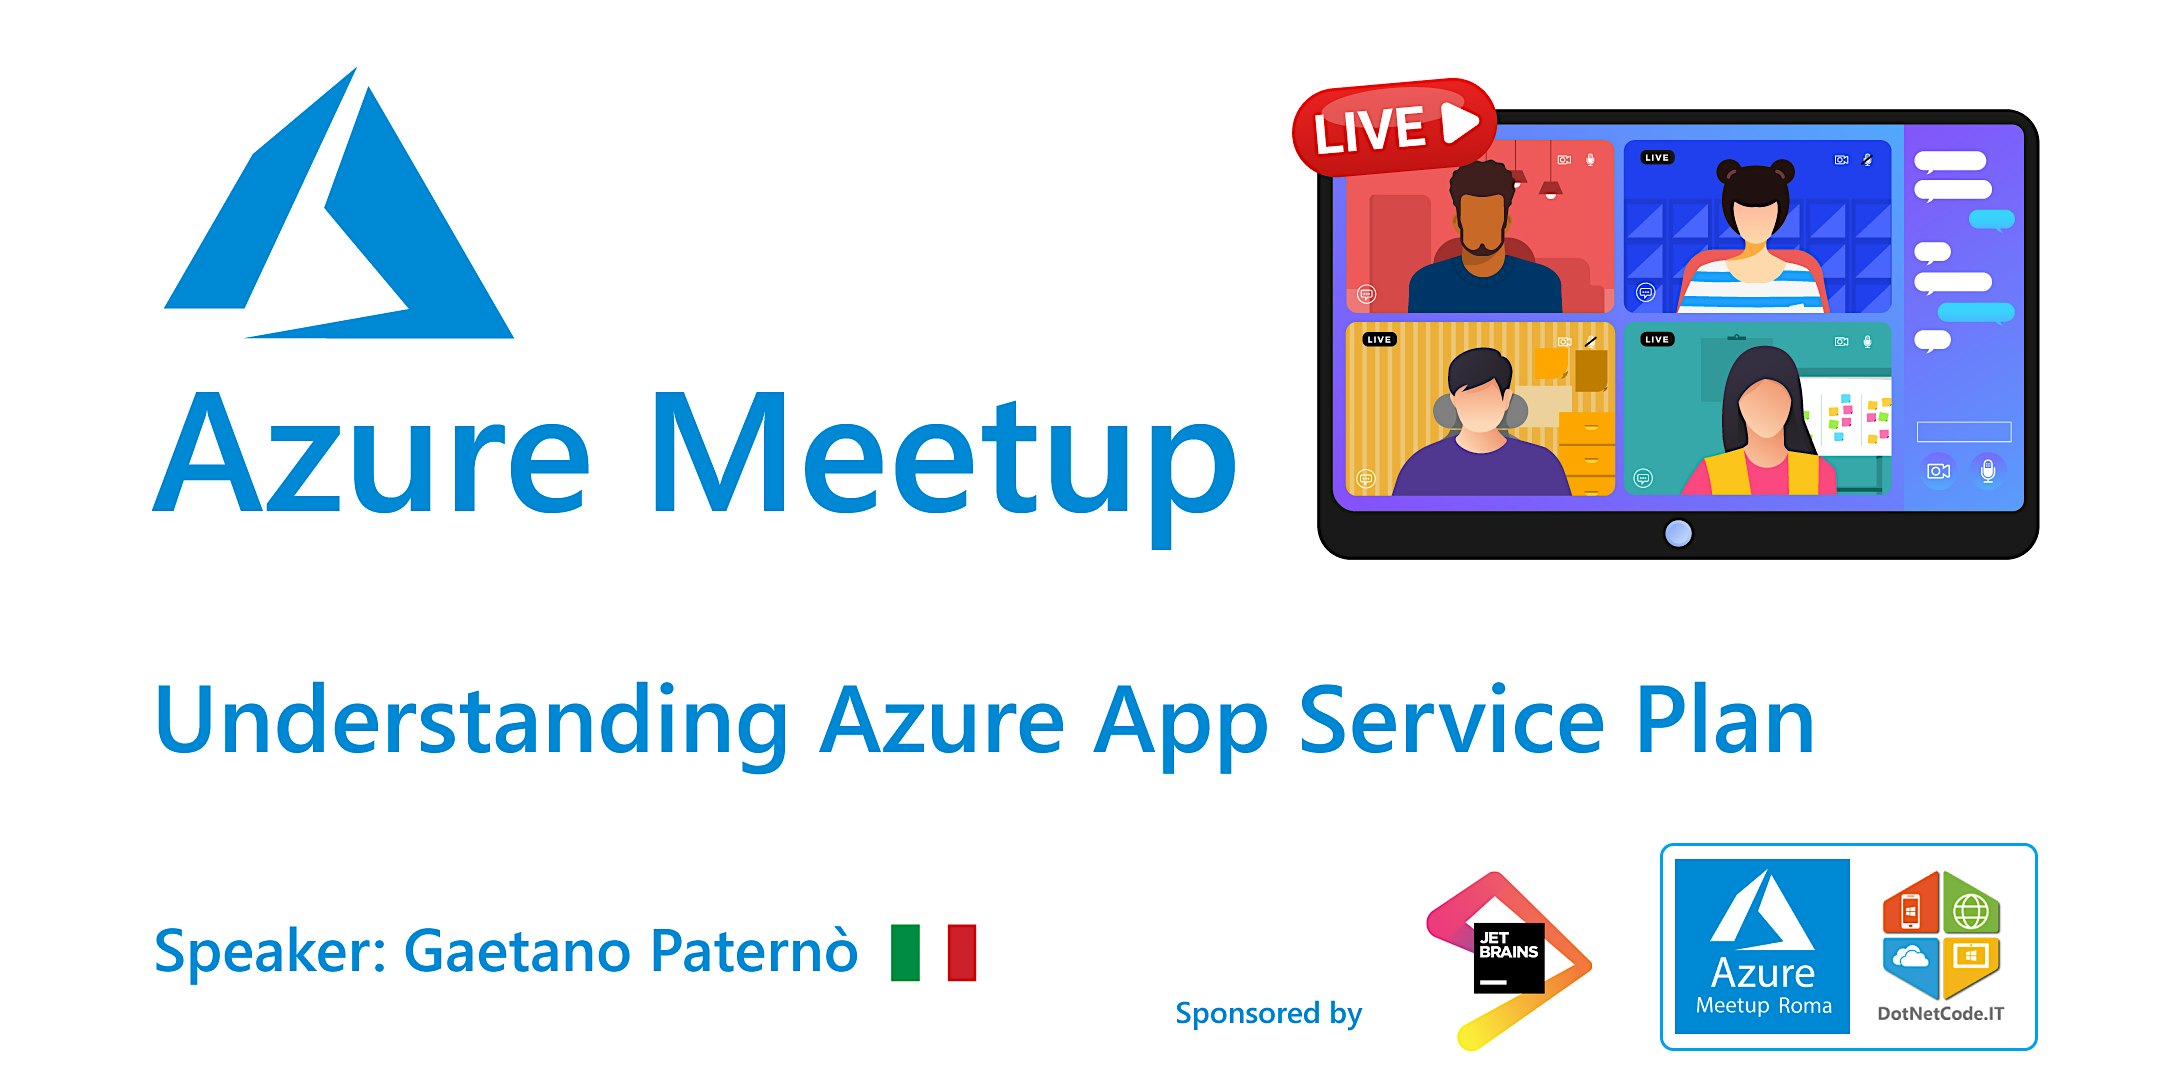 Azure Meetup: Understanding Azure App Service Plan